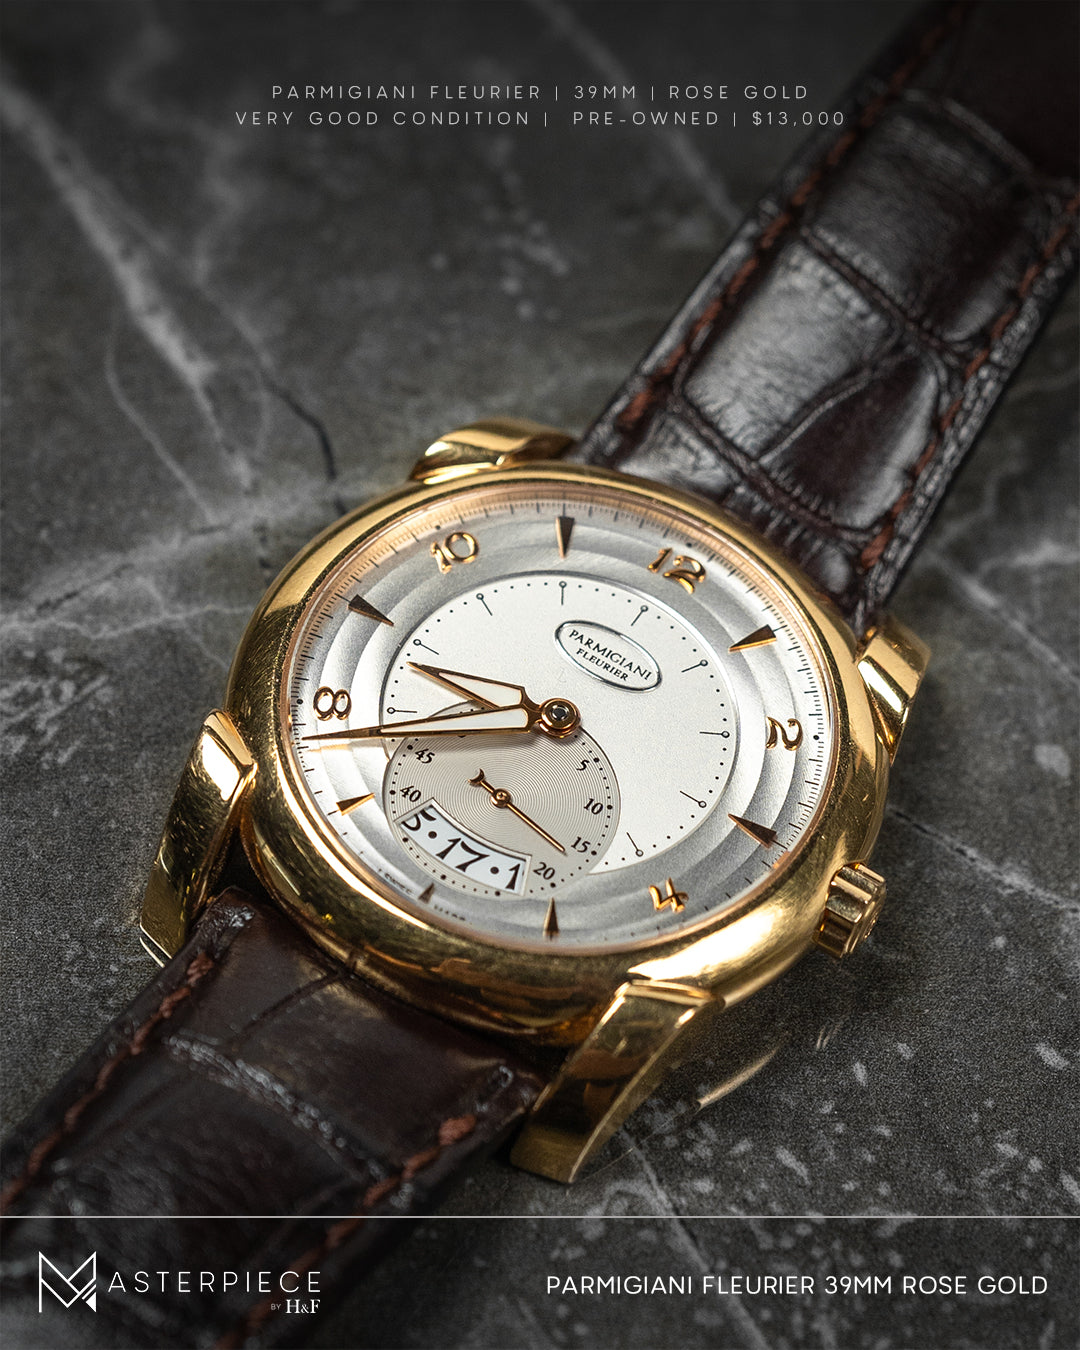 Parmigiani Fleurier Kalpa Tonda PF012500-01 18K Rose Gold Watch Pre-Owned